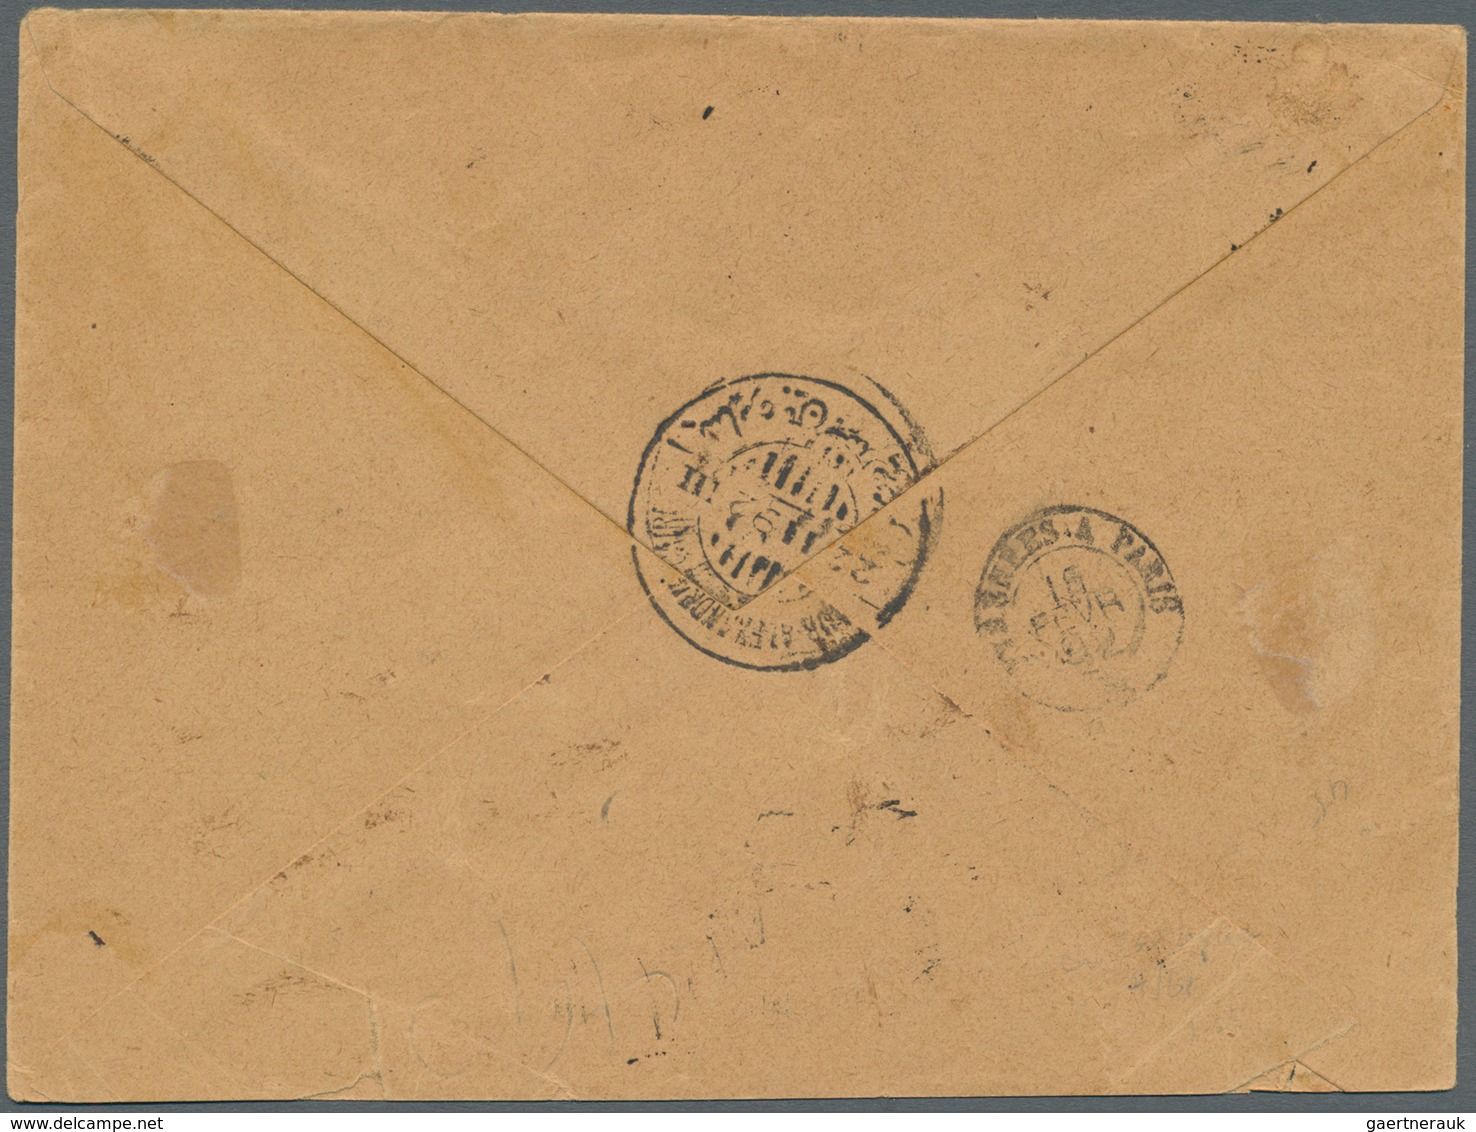 Guadeloupe: 1892. Registered Envelope Addressed To Egypt Bearing Yvert 21, 25c Black/rose (3) Tied B - Ungebraucht